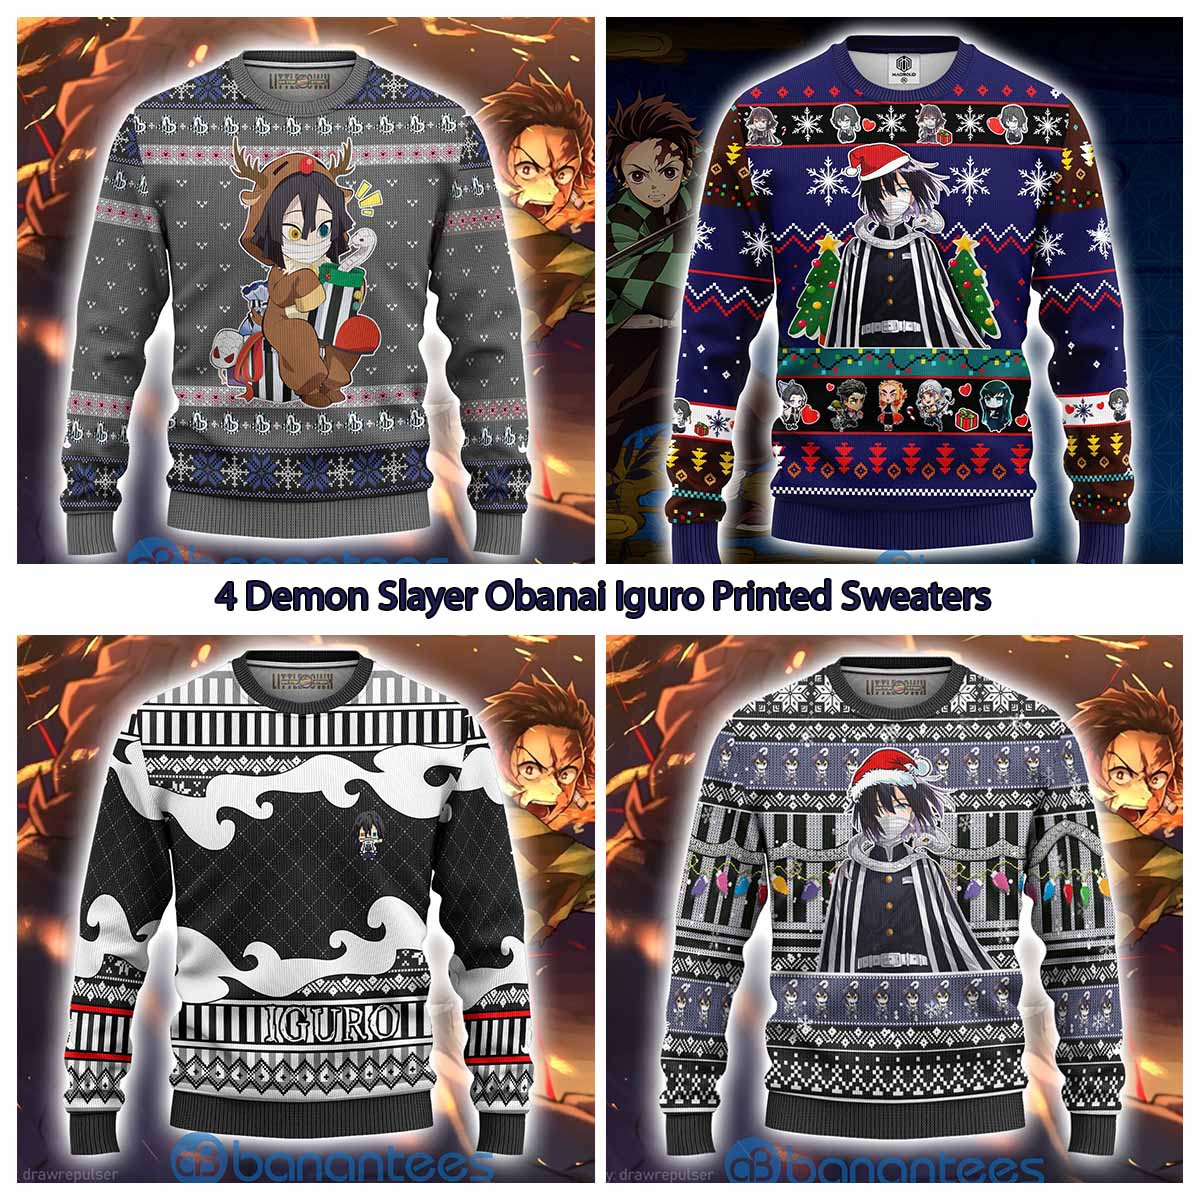 4 Demon Slayer Obanai Iguro Printed Sweaters